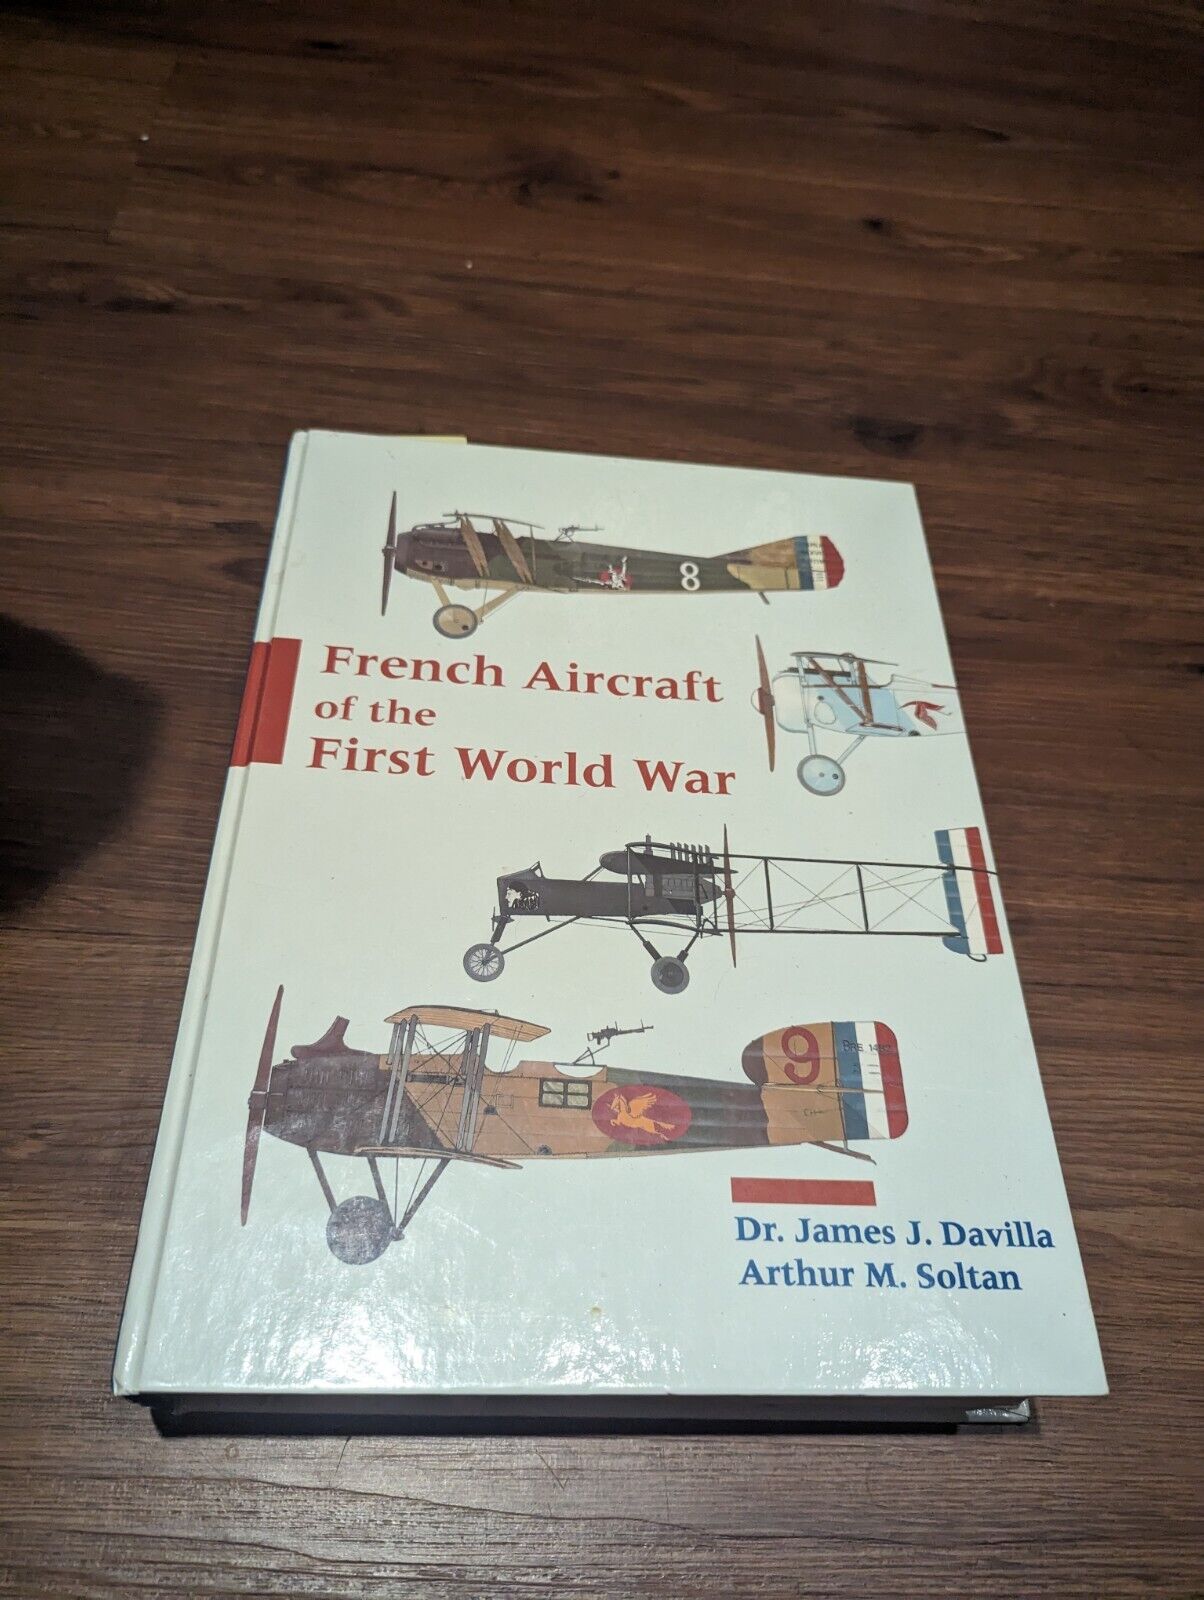 French Aircraft of the First World War by Dr.James J. Davilla & Arthur M. Soltan